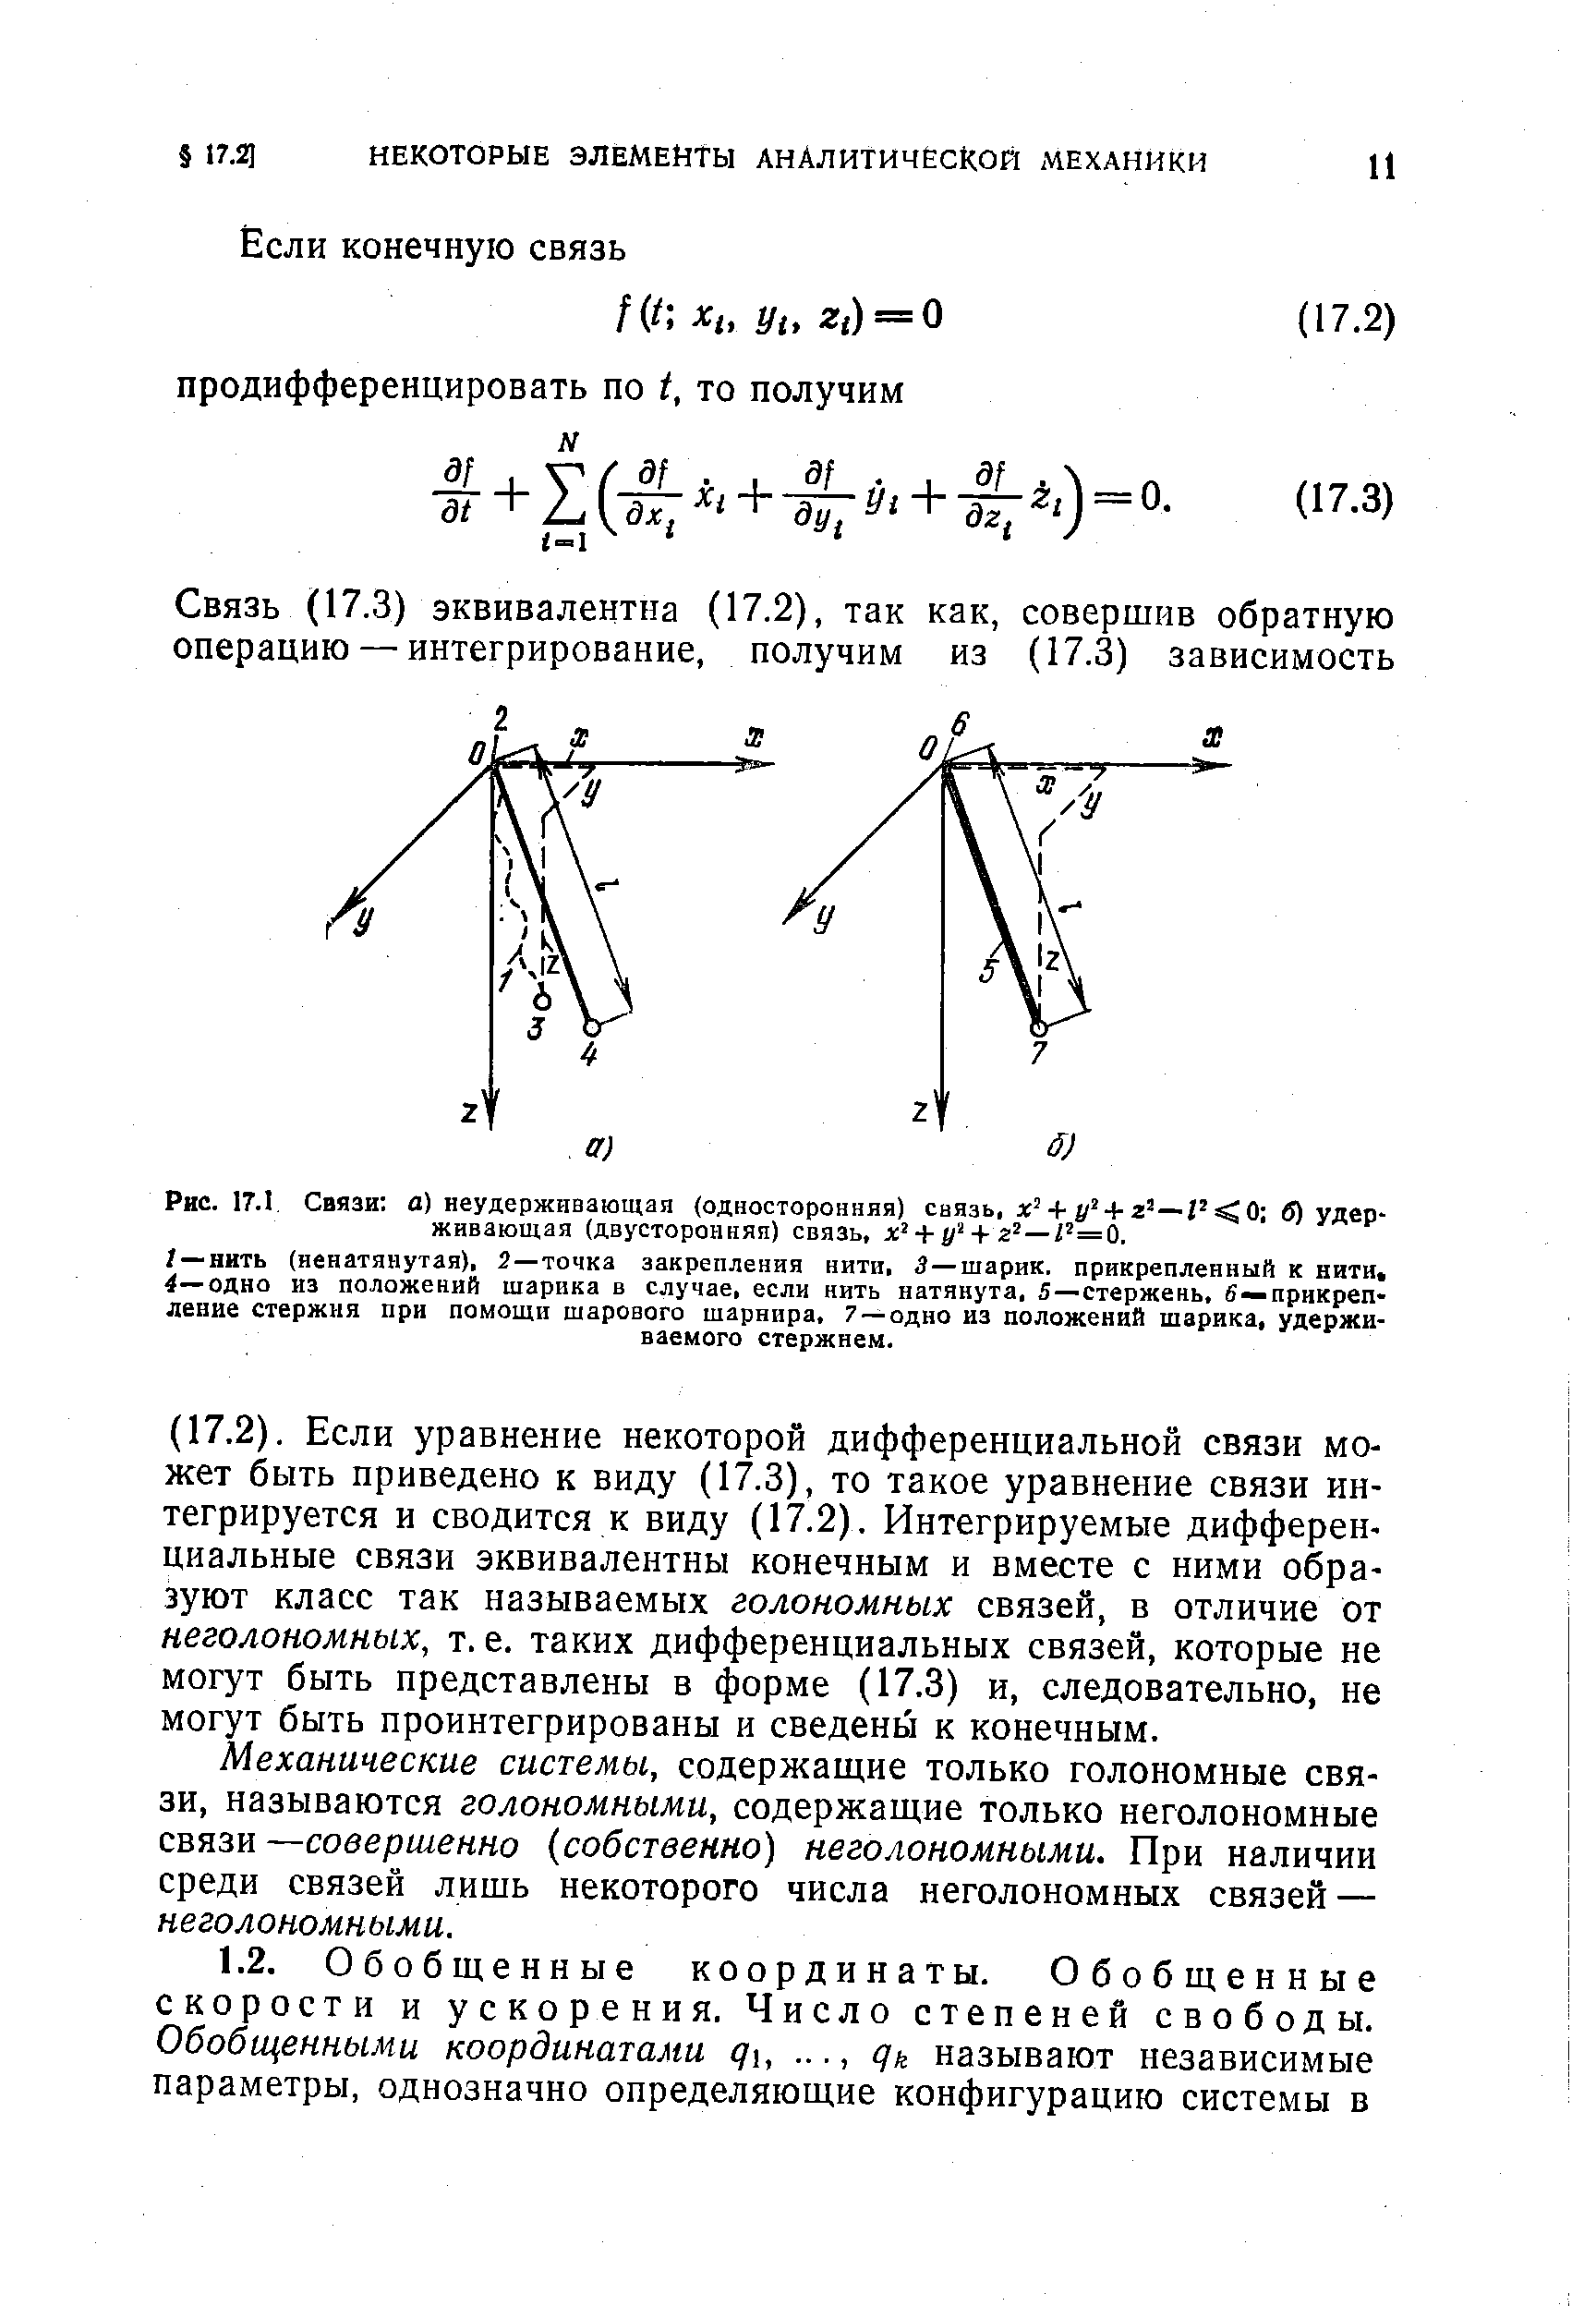 Рис. 17.1, Связи а) неудерживающая (односторонняя) связь, 0 б) удерживающая (двусторонняя) связь + + — =0.
